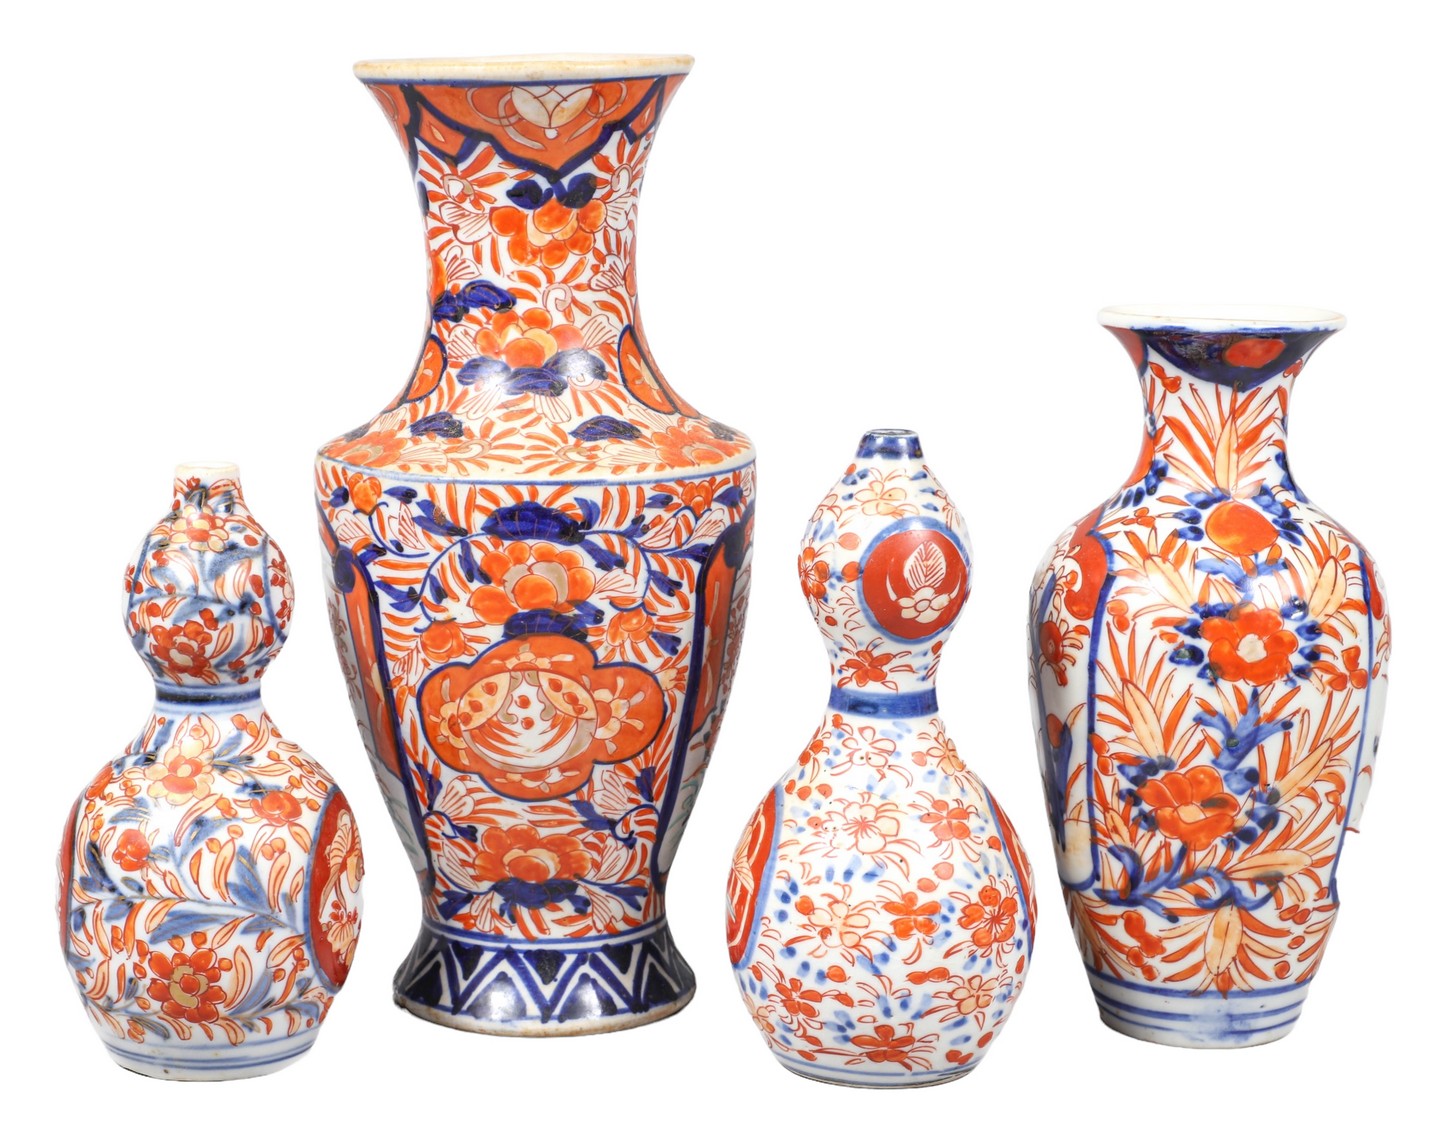  4 Japanese Imari porcelain vases  2e0abc